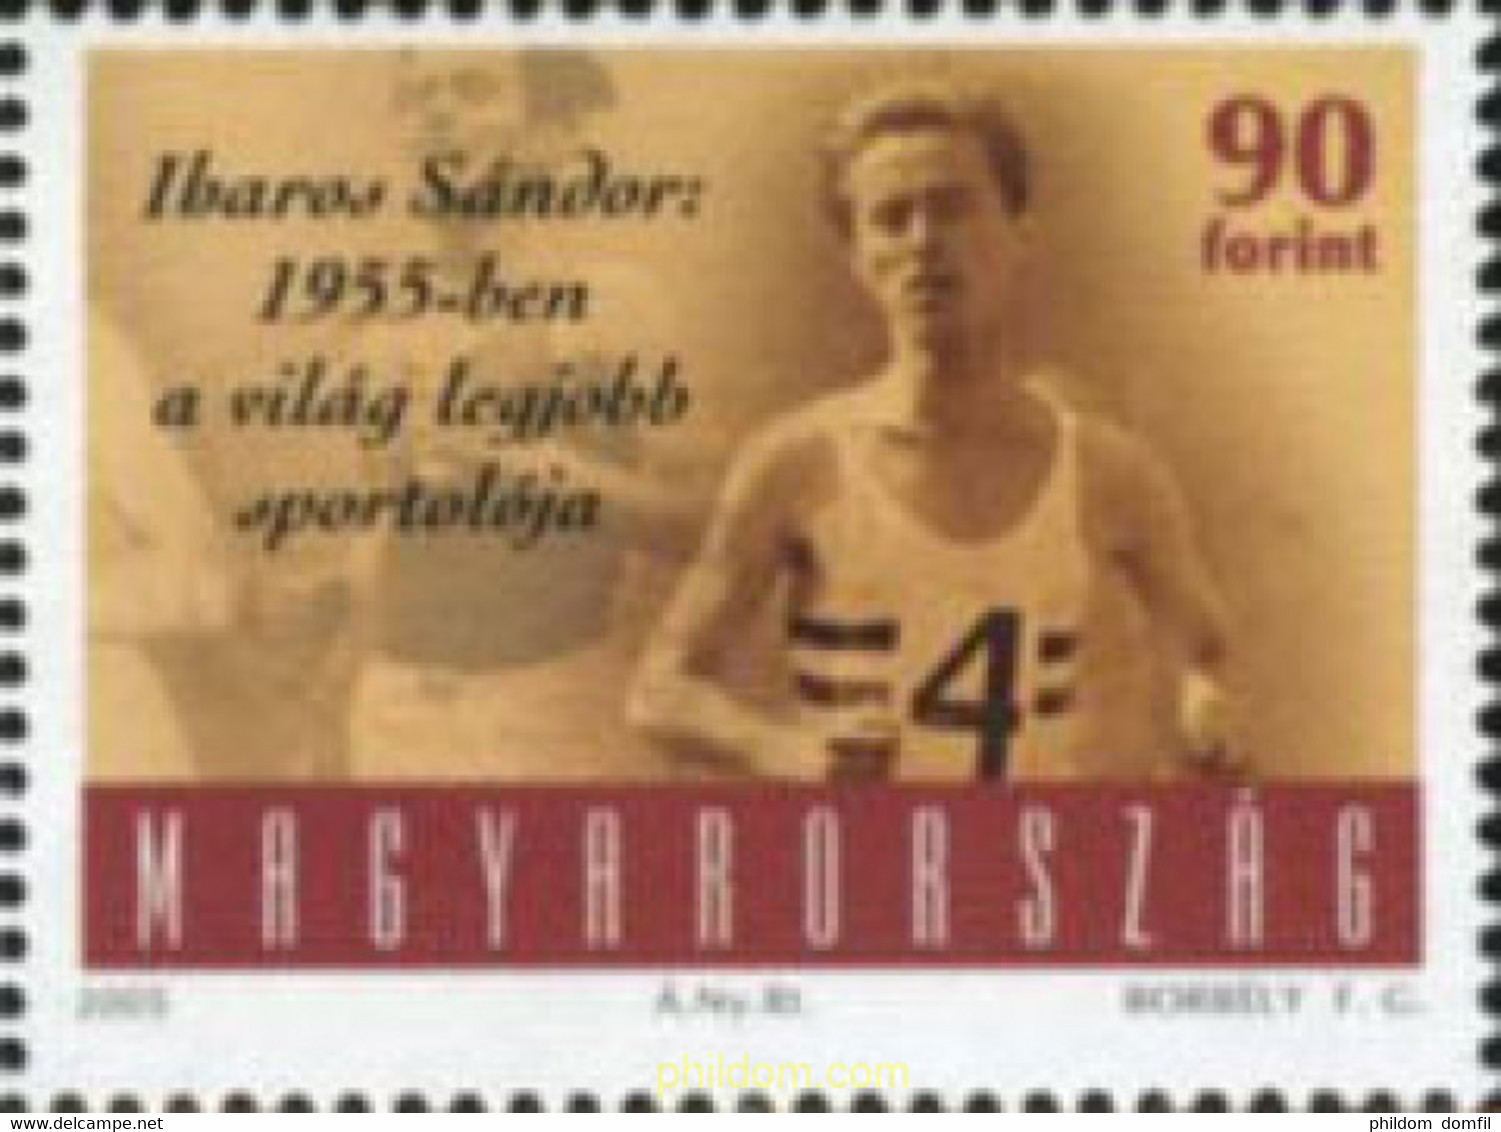 182534 MNH HUNGRIA 2005 DEPORTE - Used Stamps